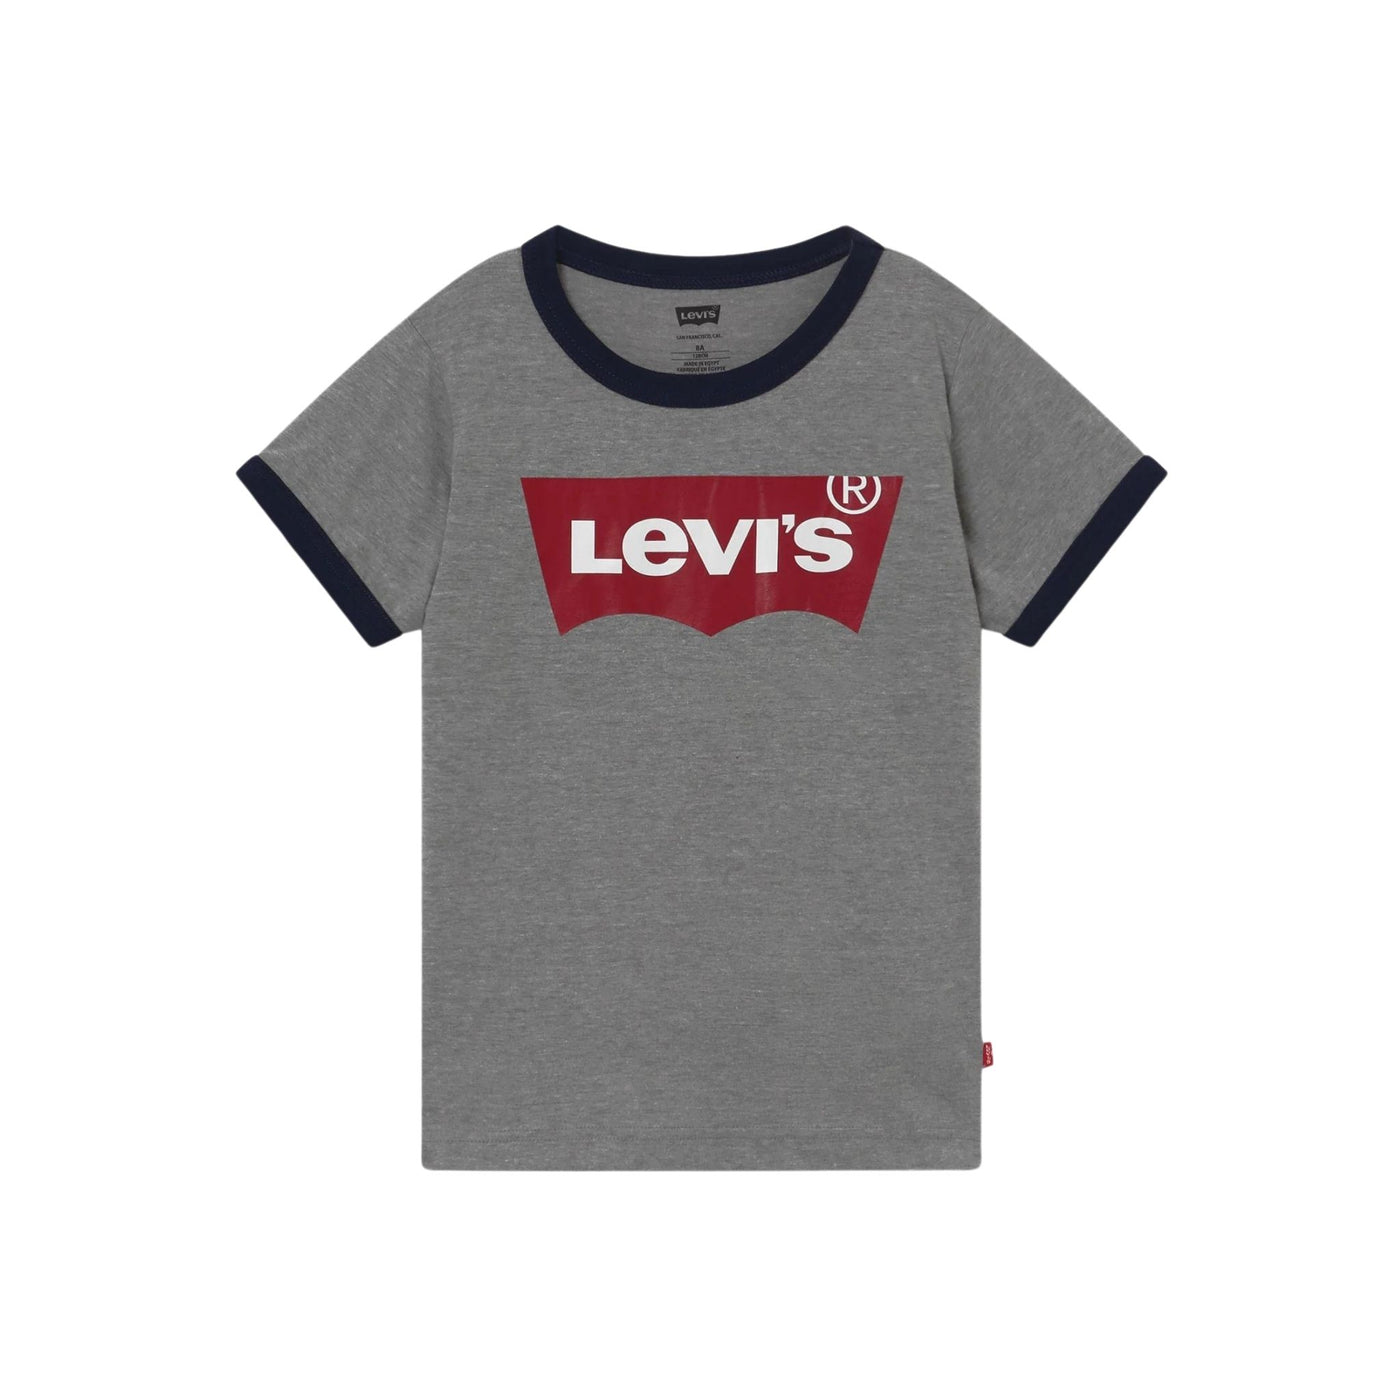 T-shirt da bambino grigia firmata Levi's vista frontale